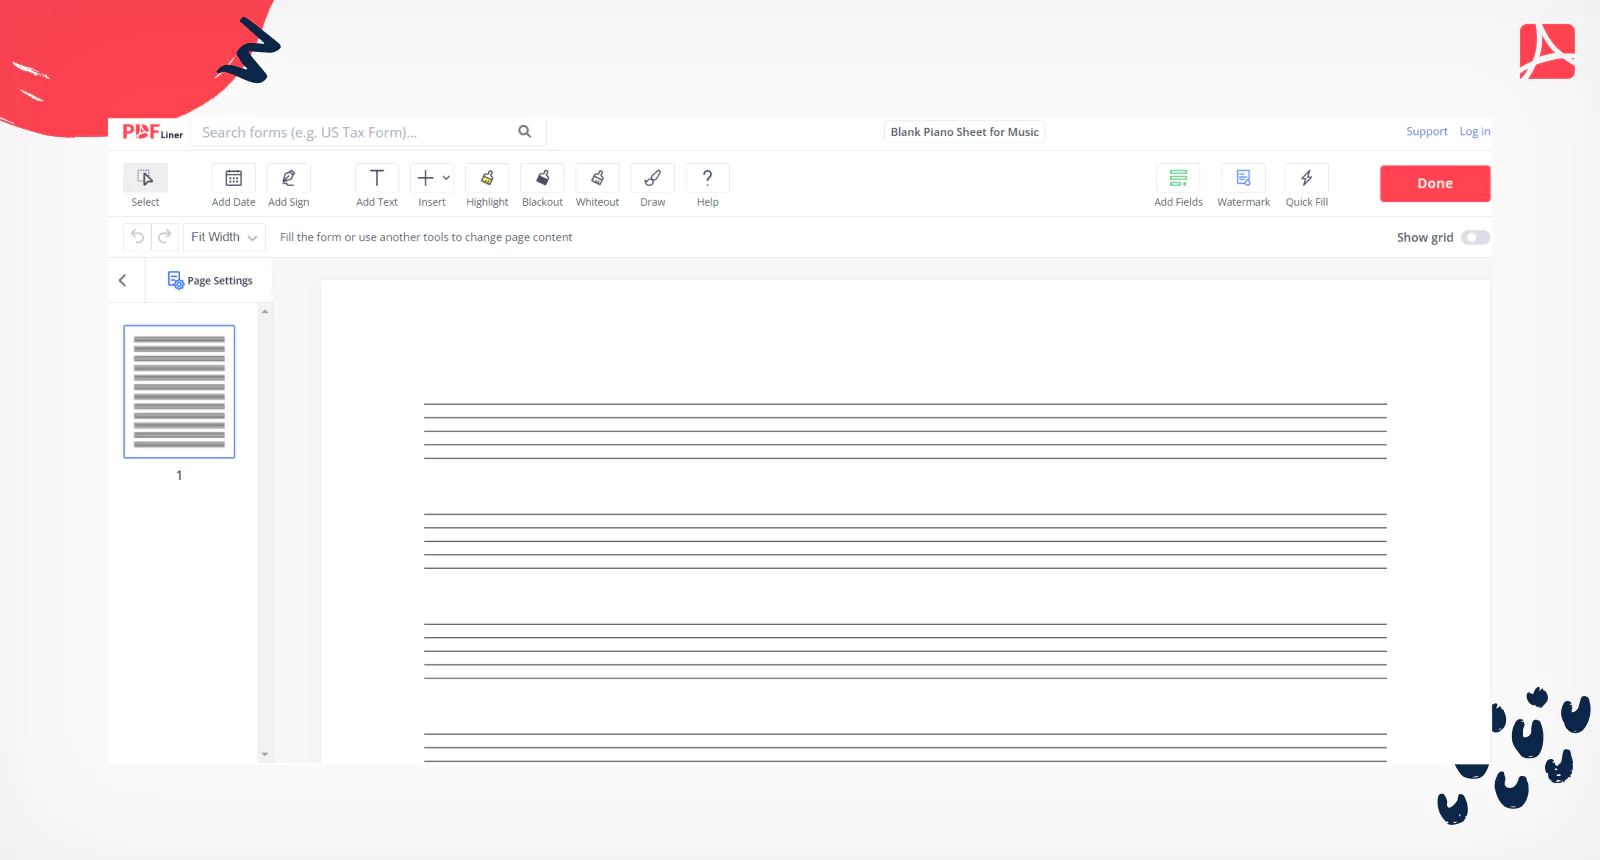 Blank Piano Sheet for Music on PDFLiner